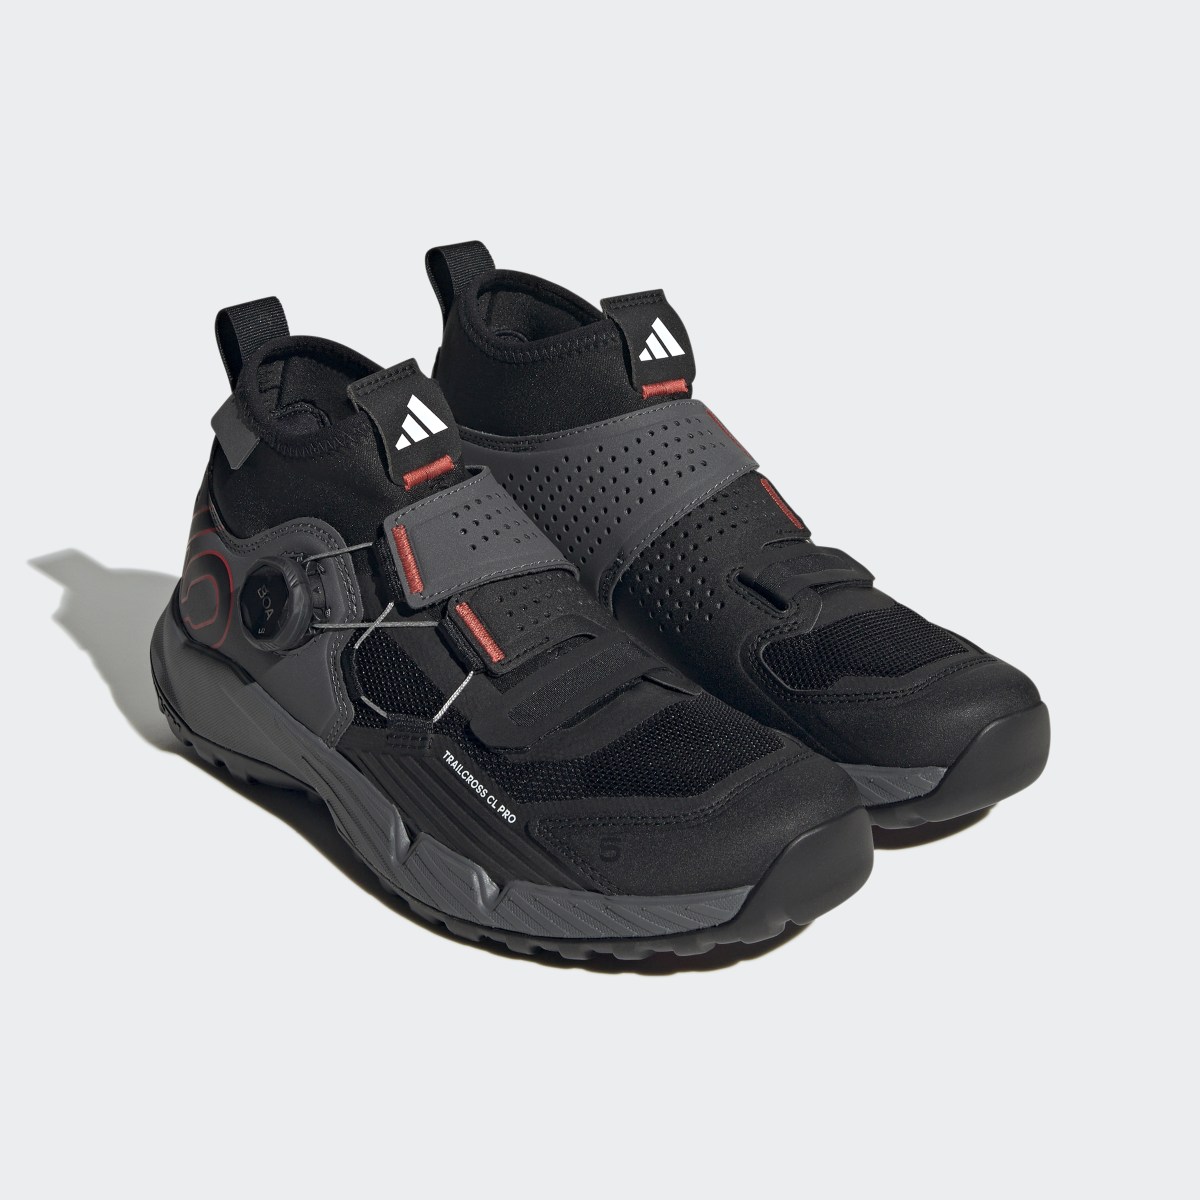 Adidas Five Ten Trailcross Pro Clip-in Mountain Bike Shoes. 5